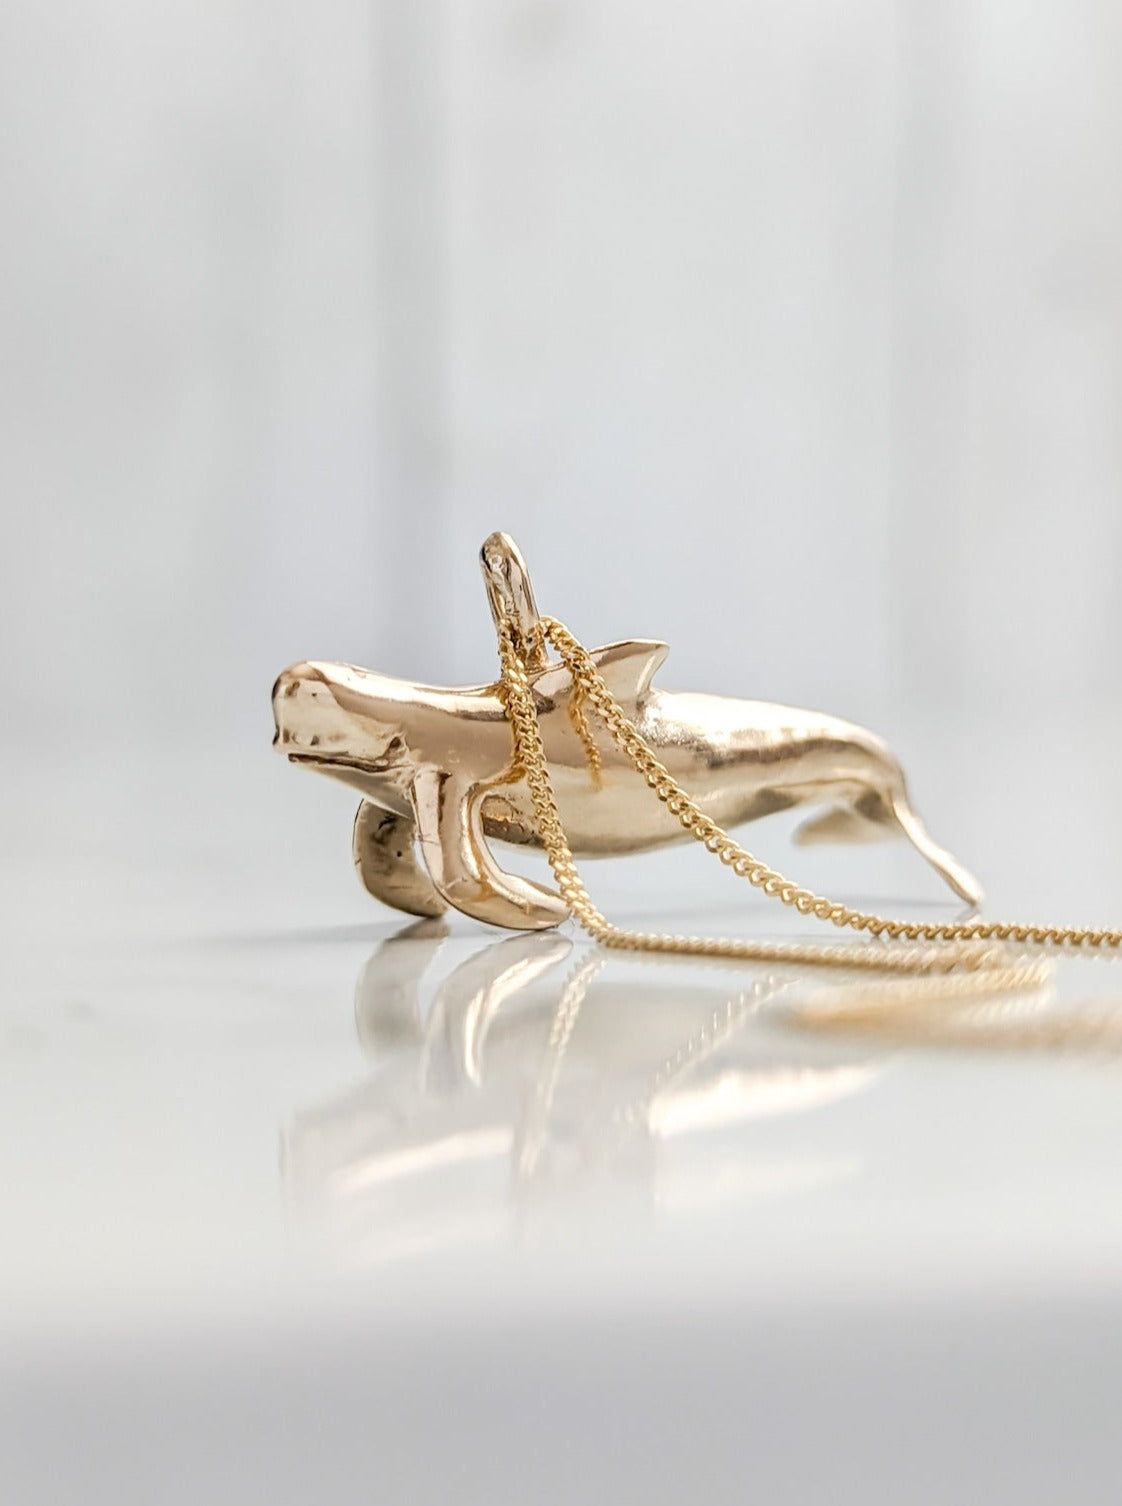 Realistic 3D gold whale necklace